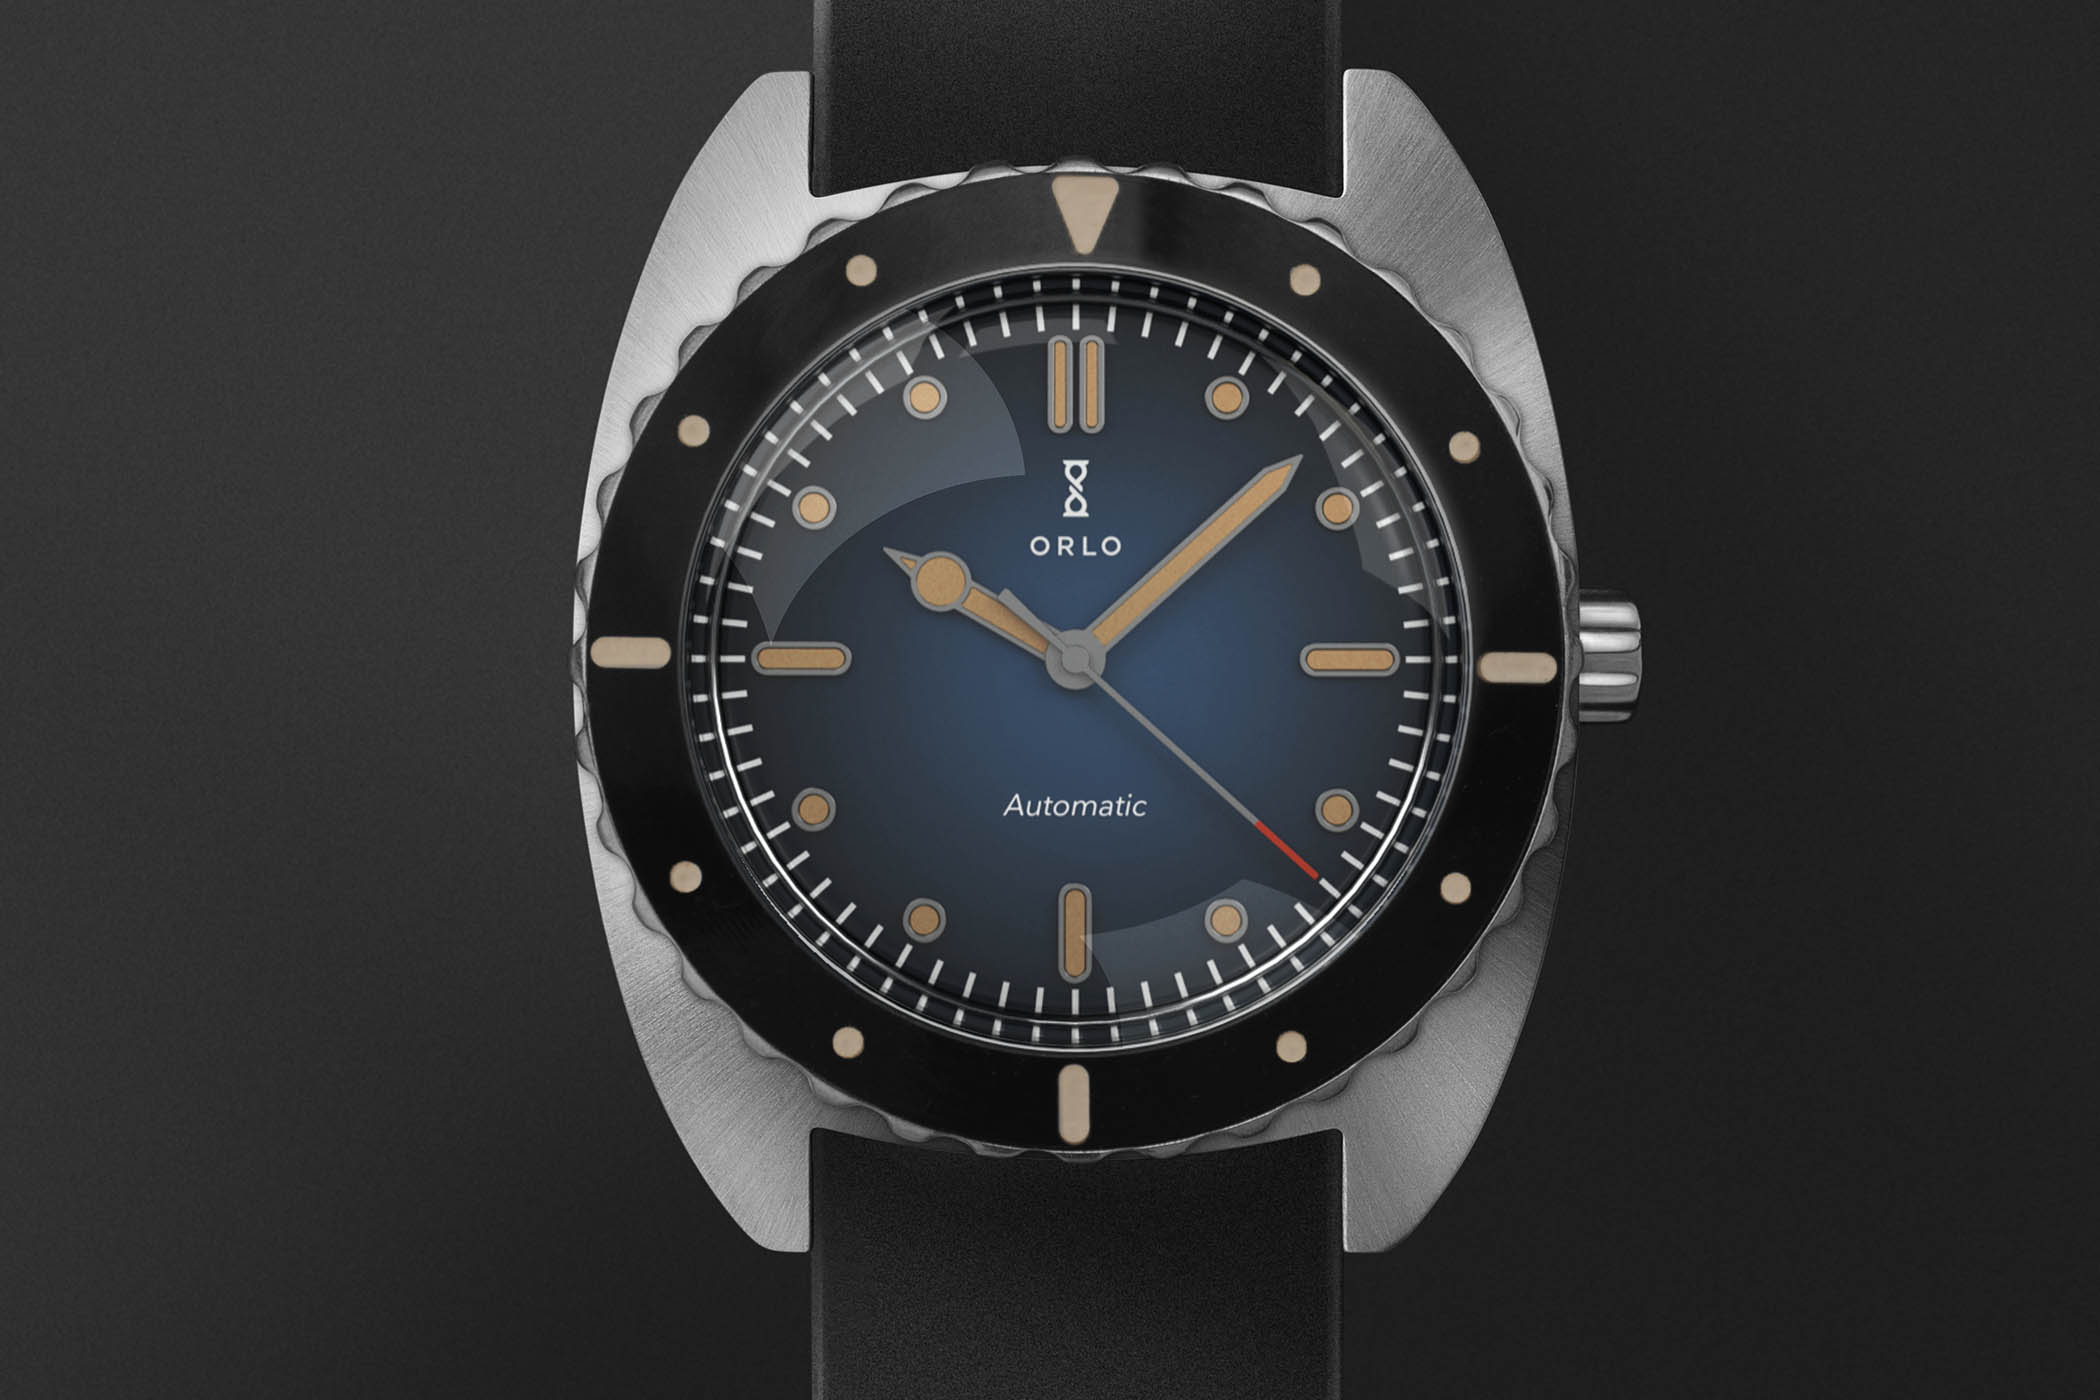 Orlo Ticonite Automatic Diver’s Watch wth Scratchproof titanium case